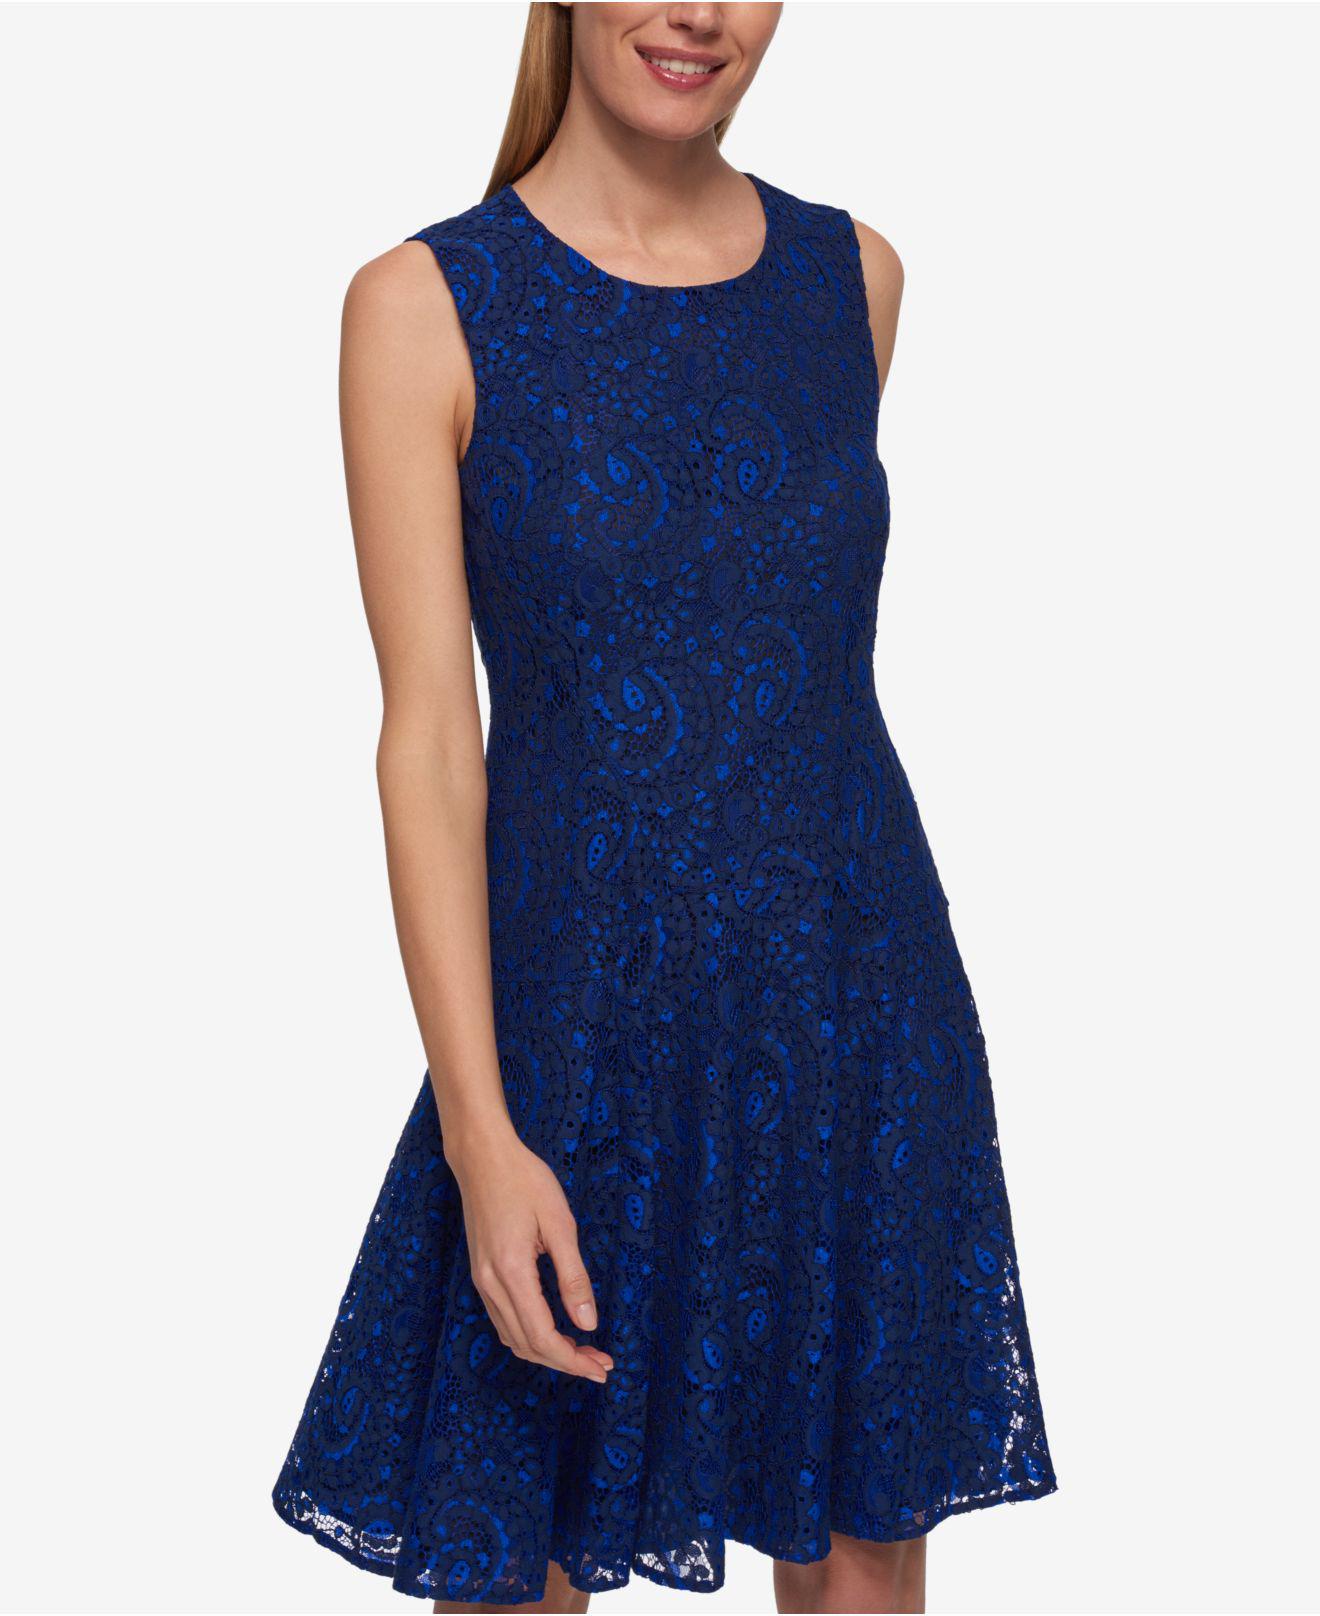 tommy hilfiger blue lace dress